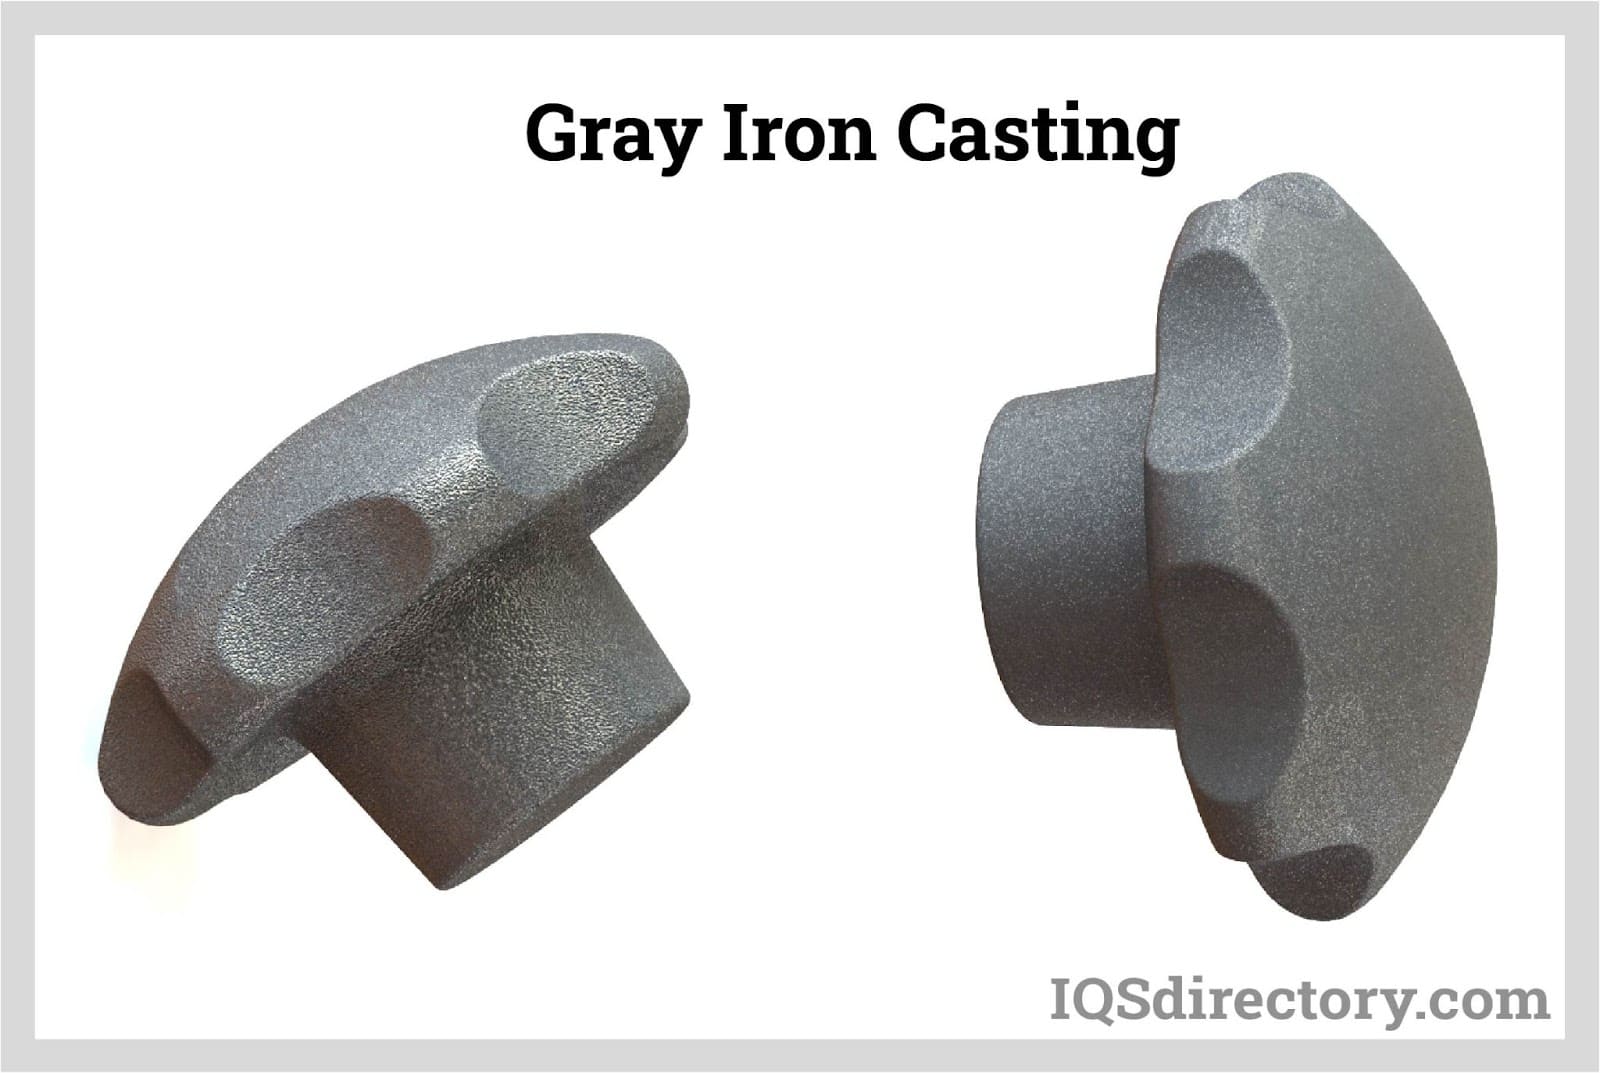 Gray Iron Casting